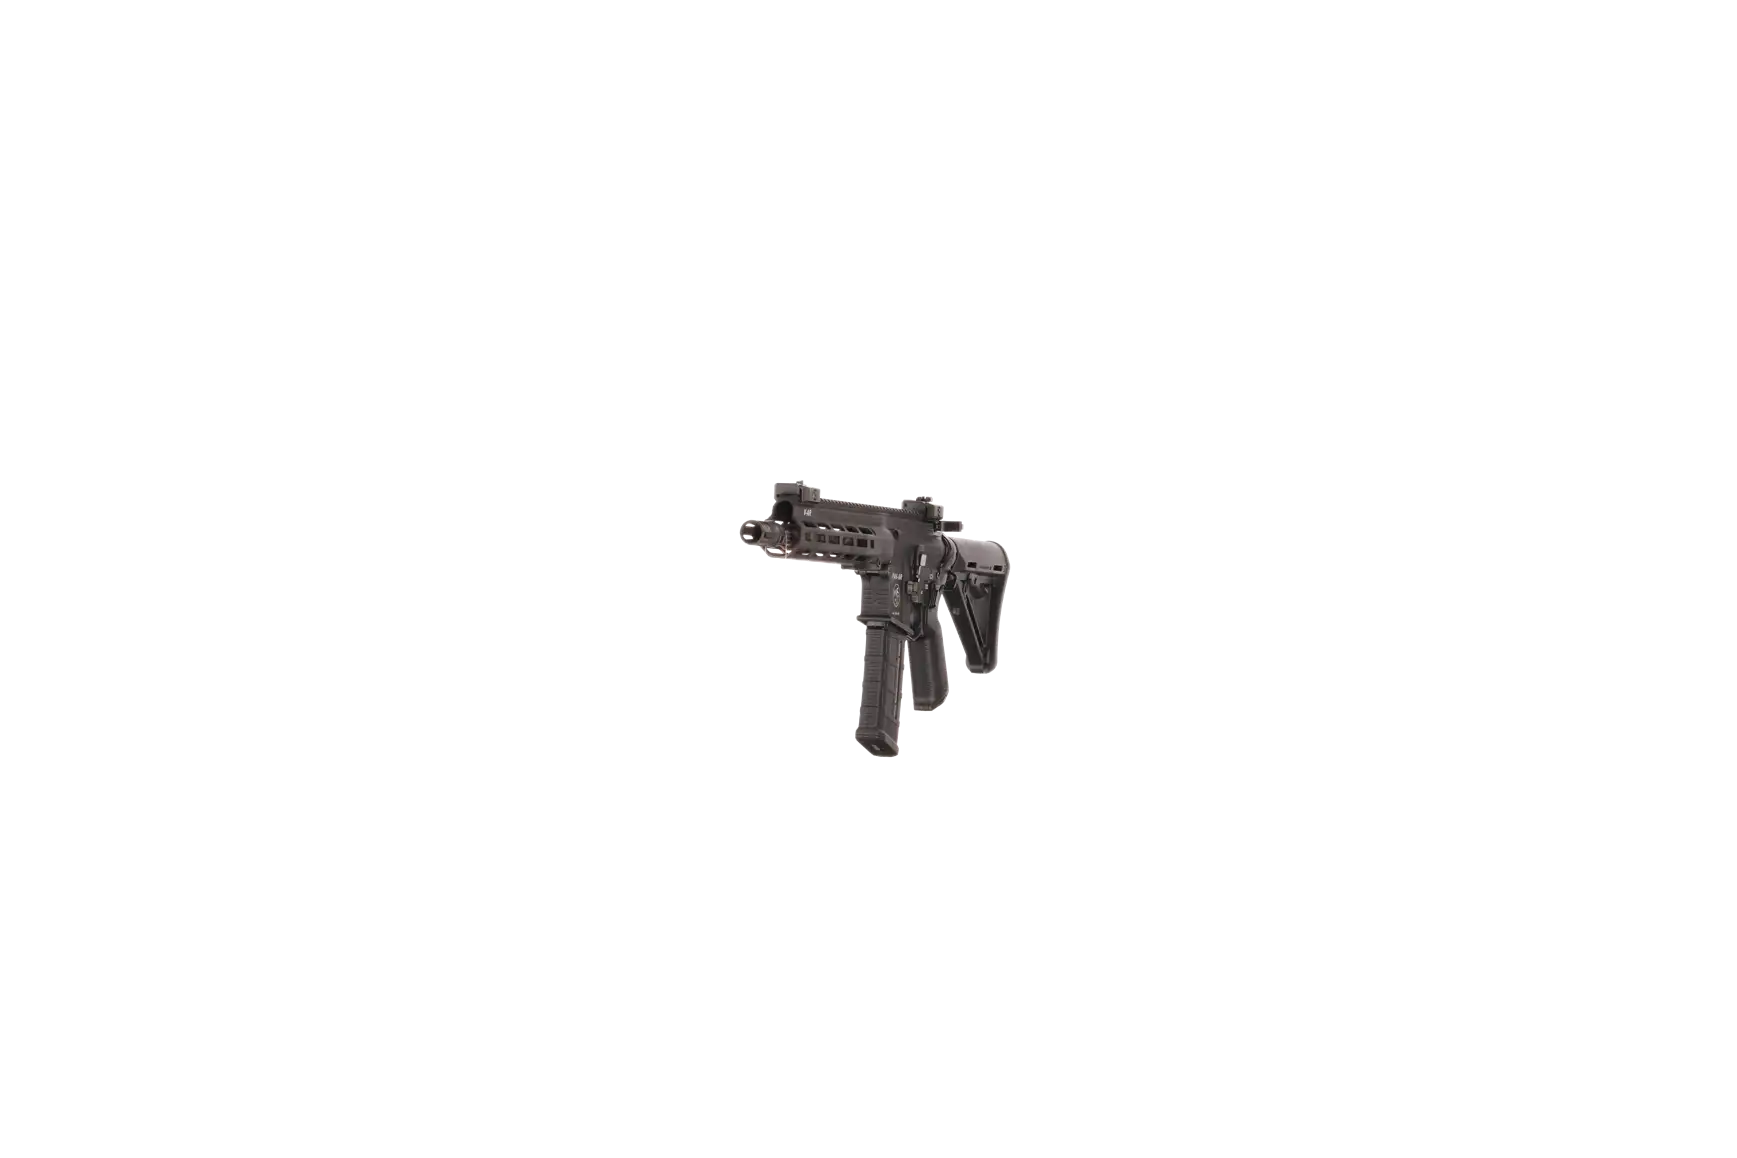 Náhledový obrázek pušky V-AR 556 x 45mm SPINVIEW 1 R22